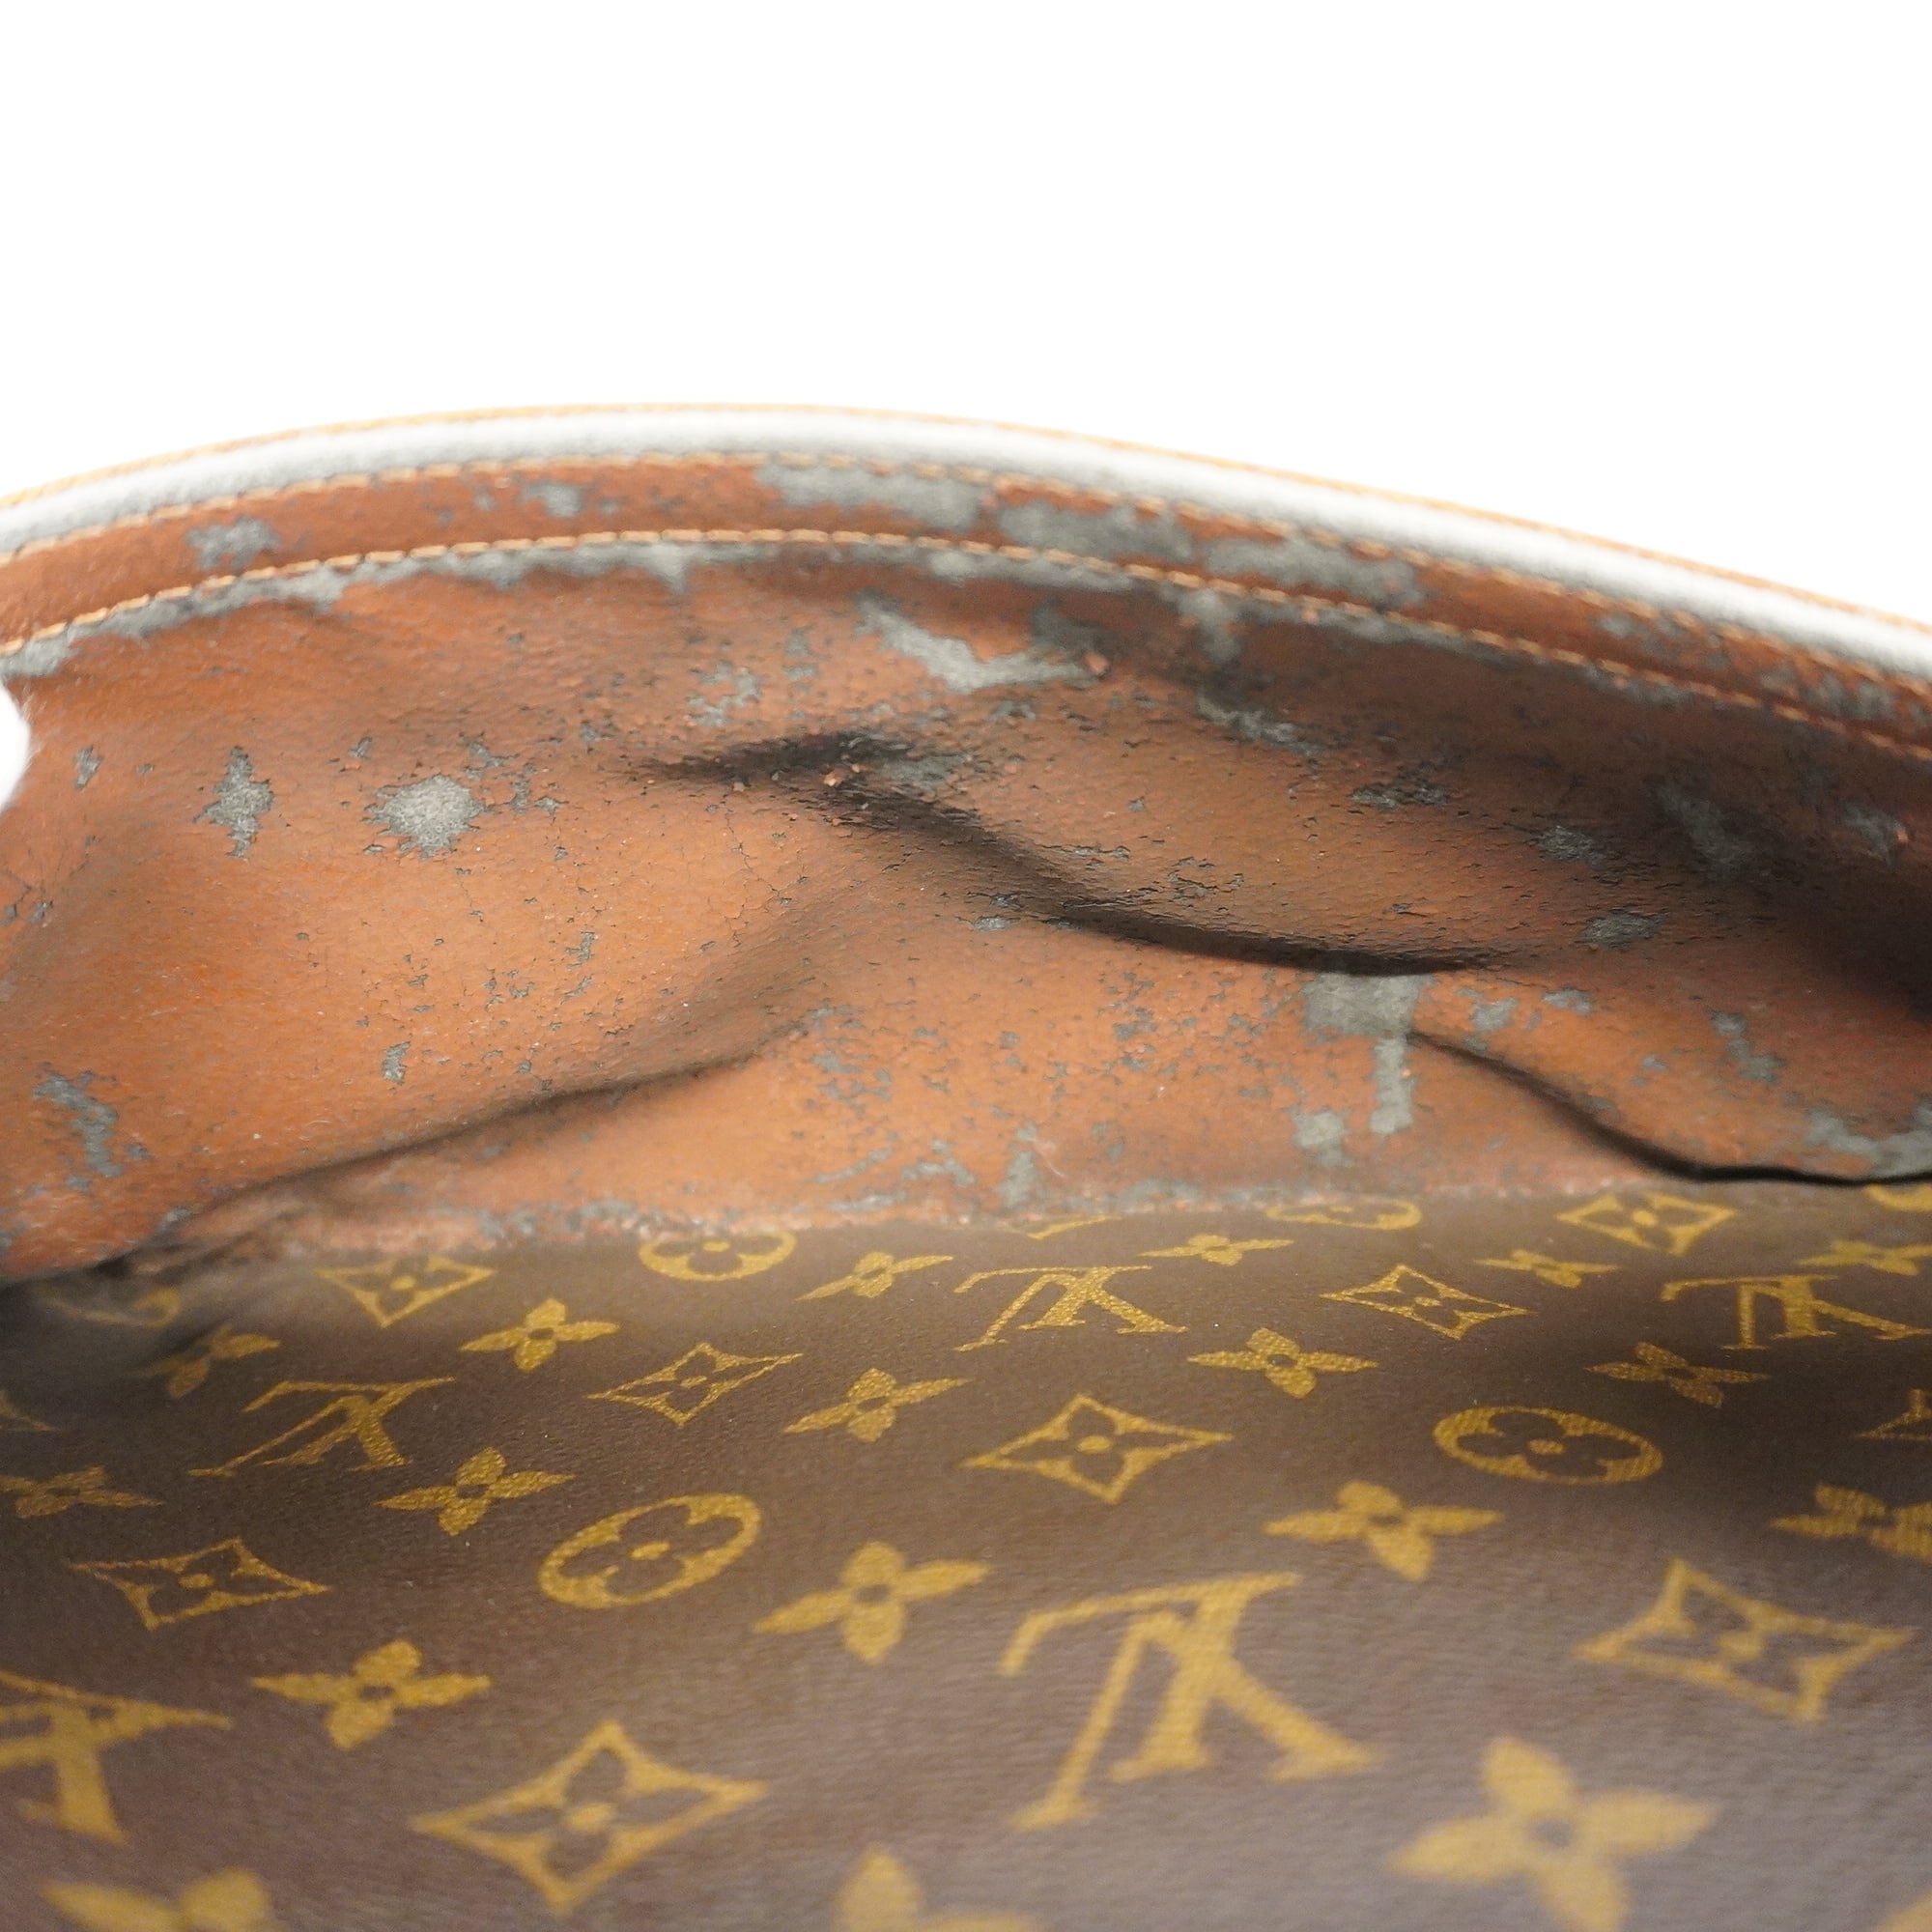 Used Auth Louis Vuitton shoulder bag monogram Trocadero 30 M51272